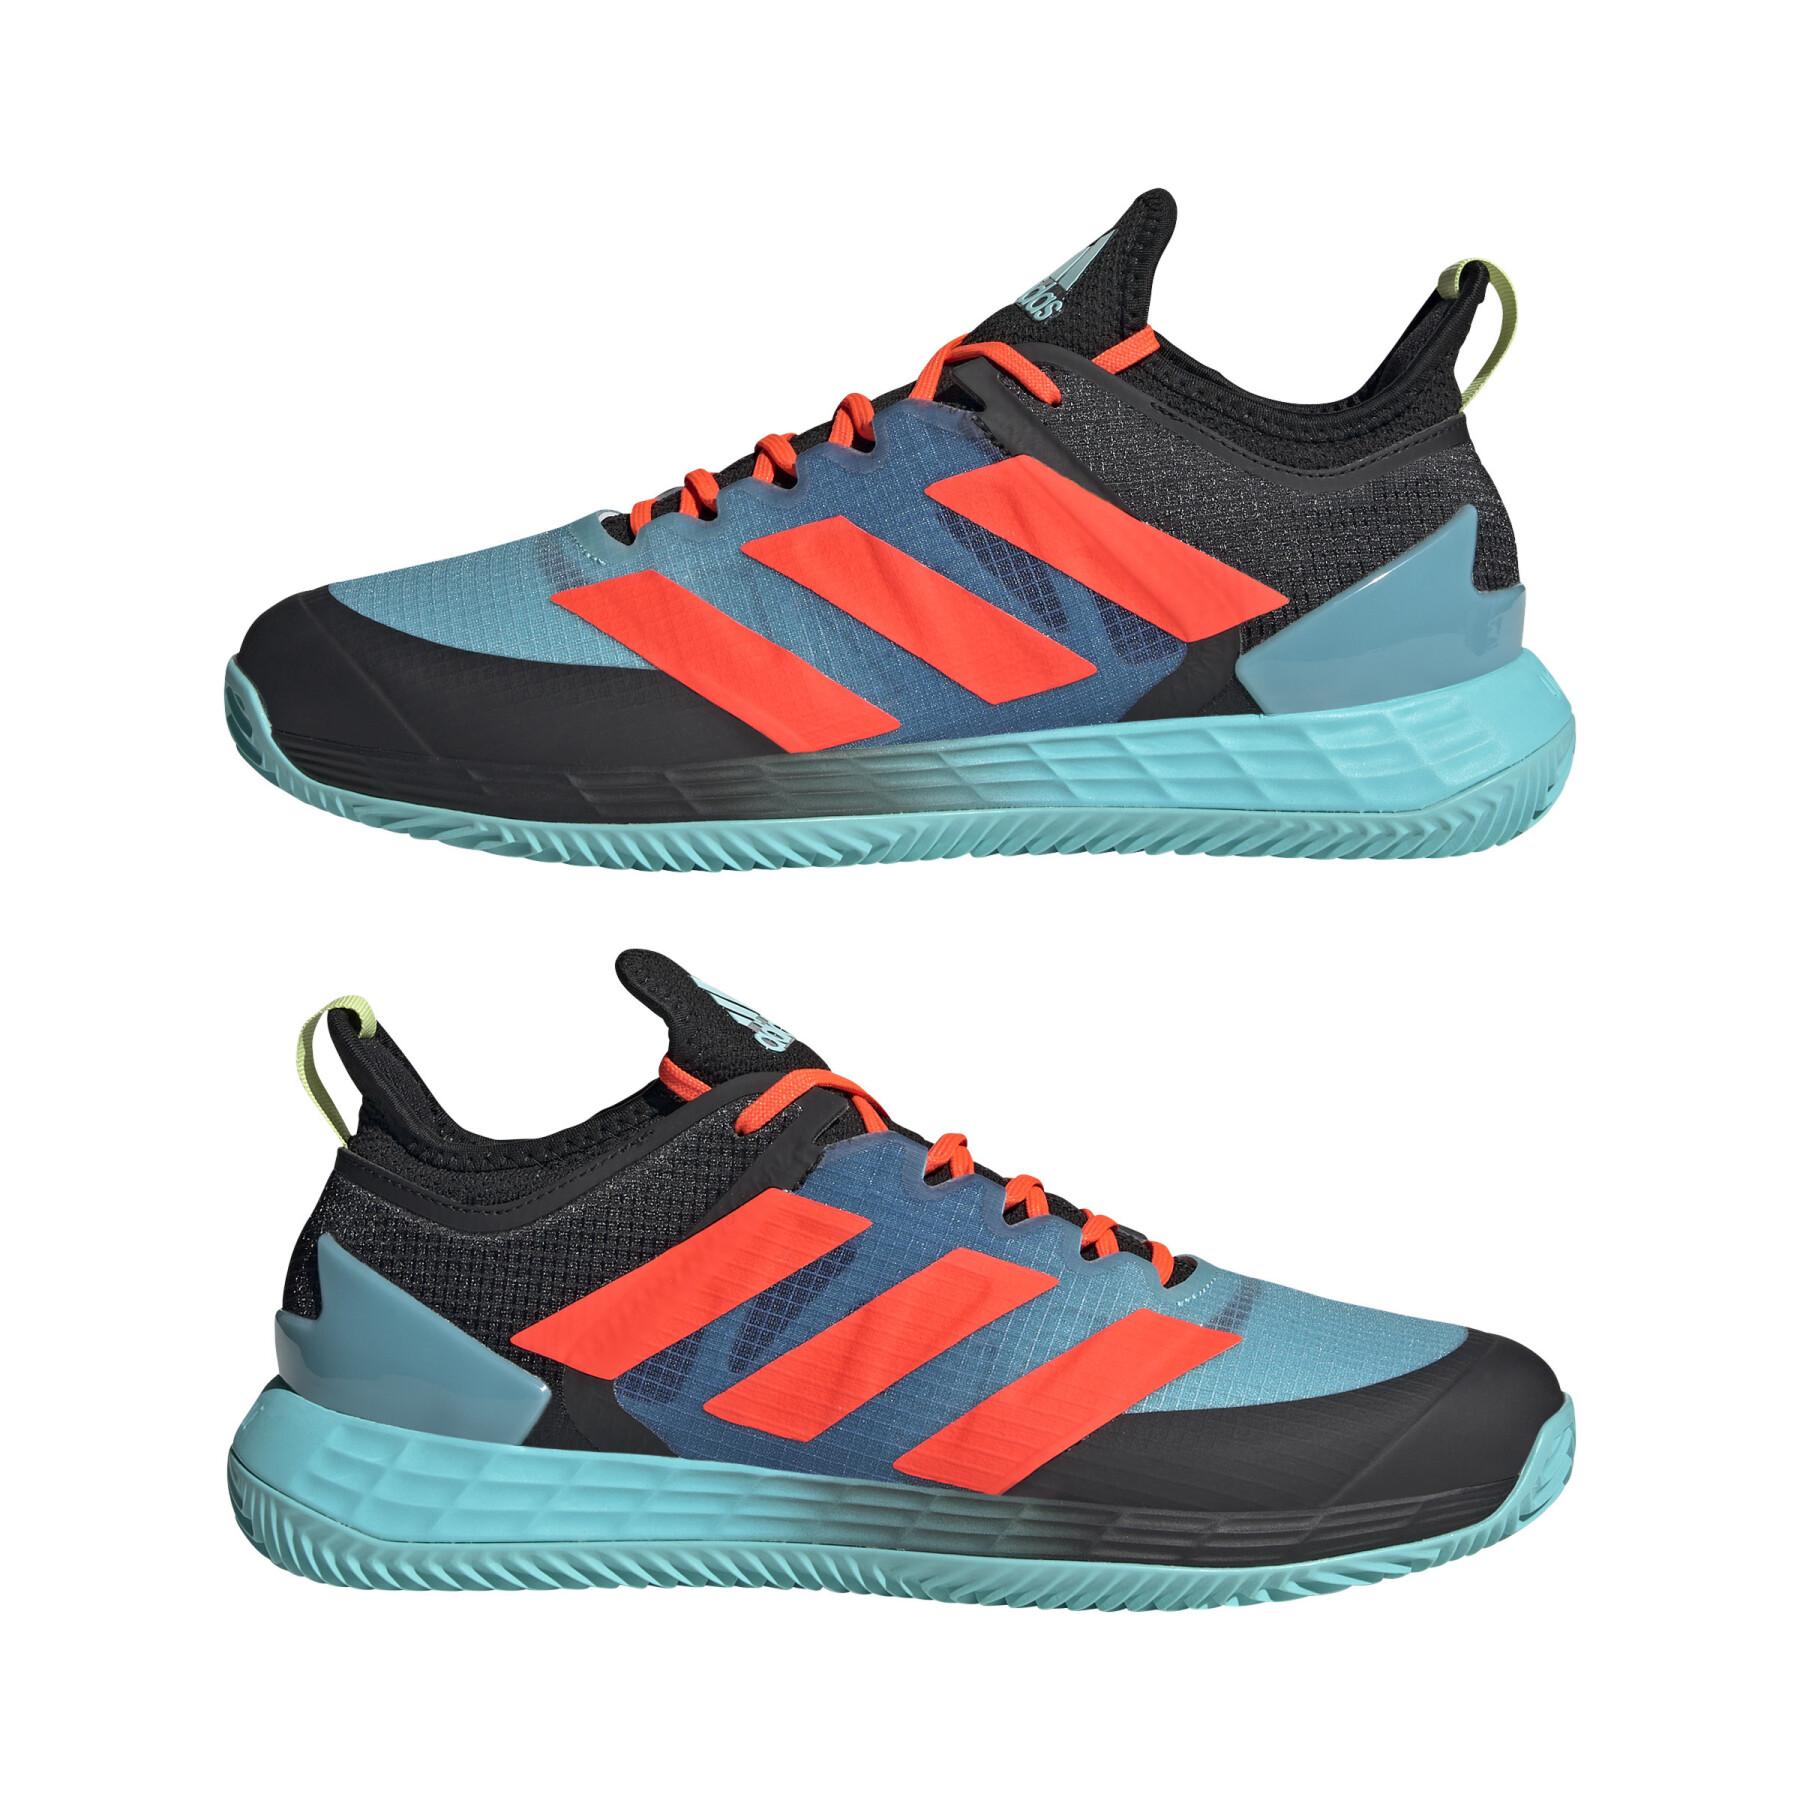 Chaussures de tennis terre battue Adidas Adizero Ubersonic 4